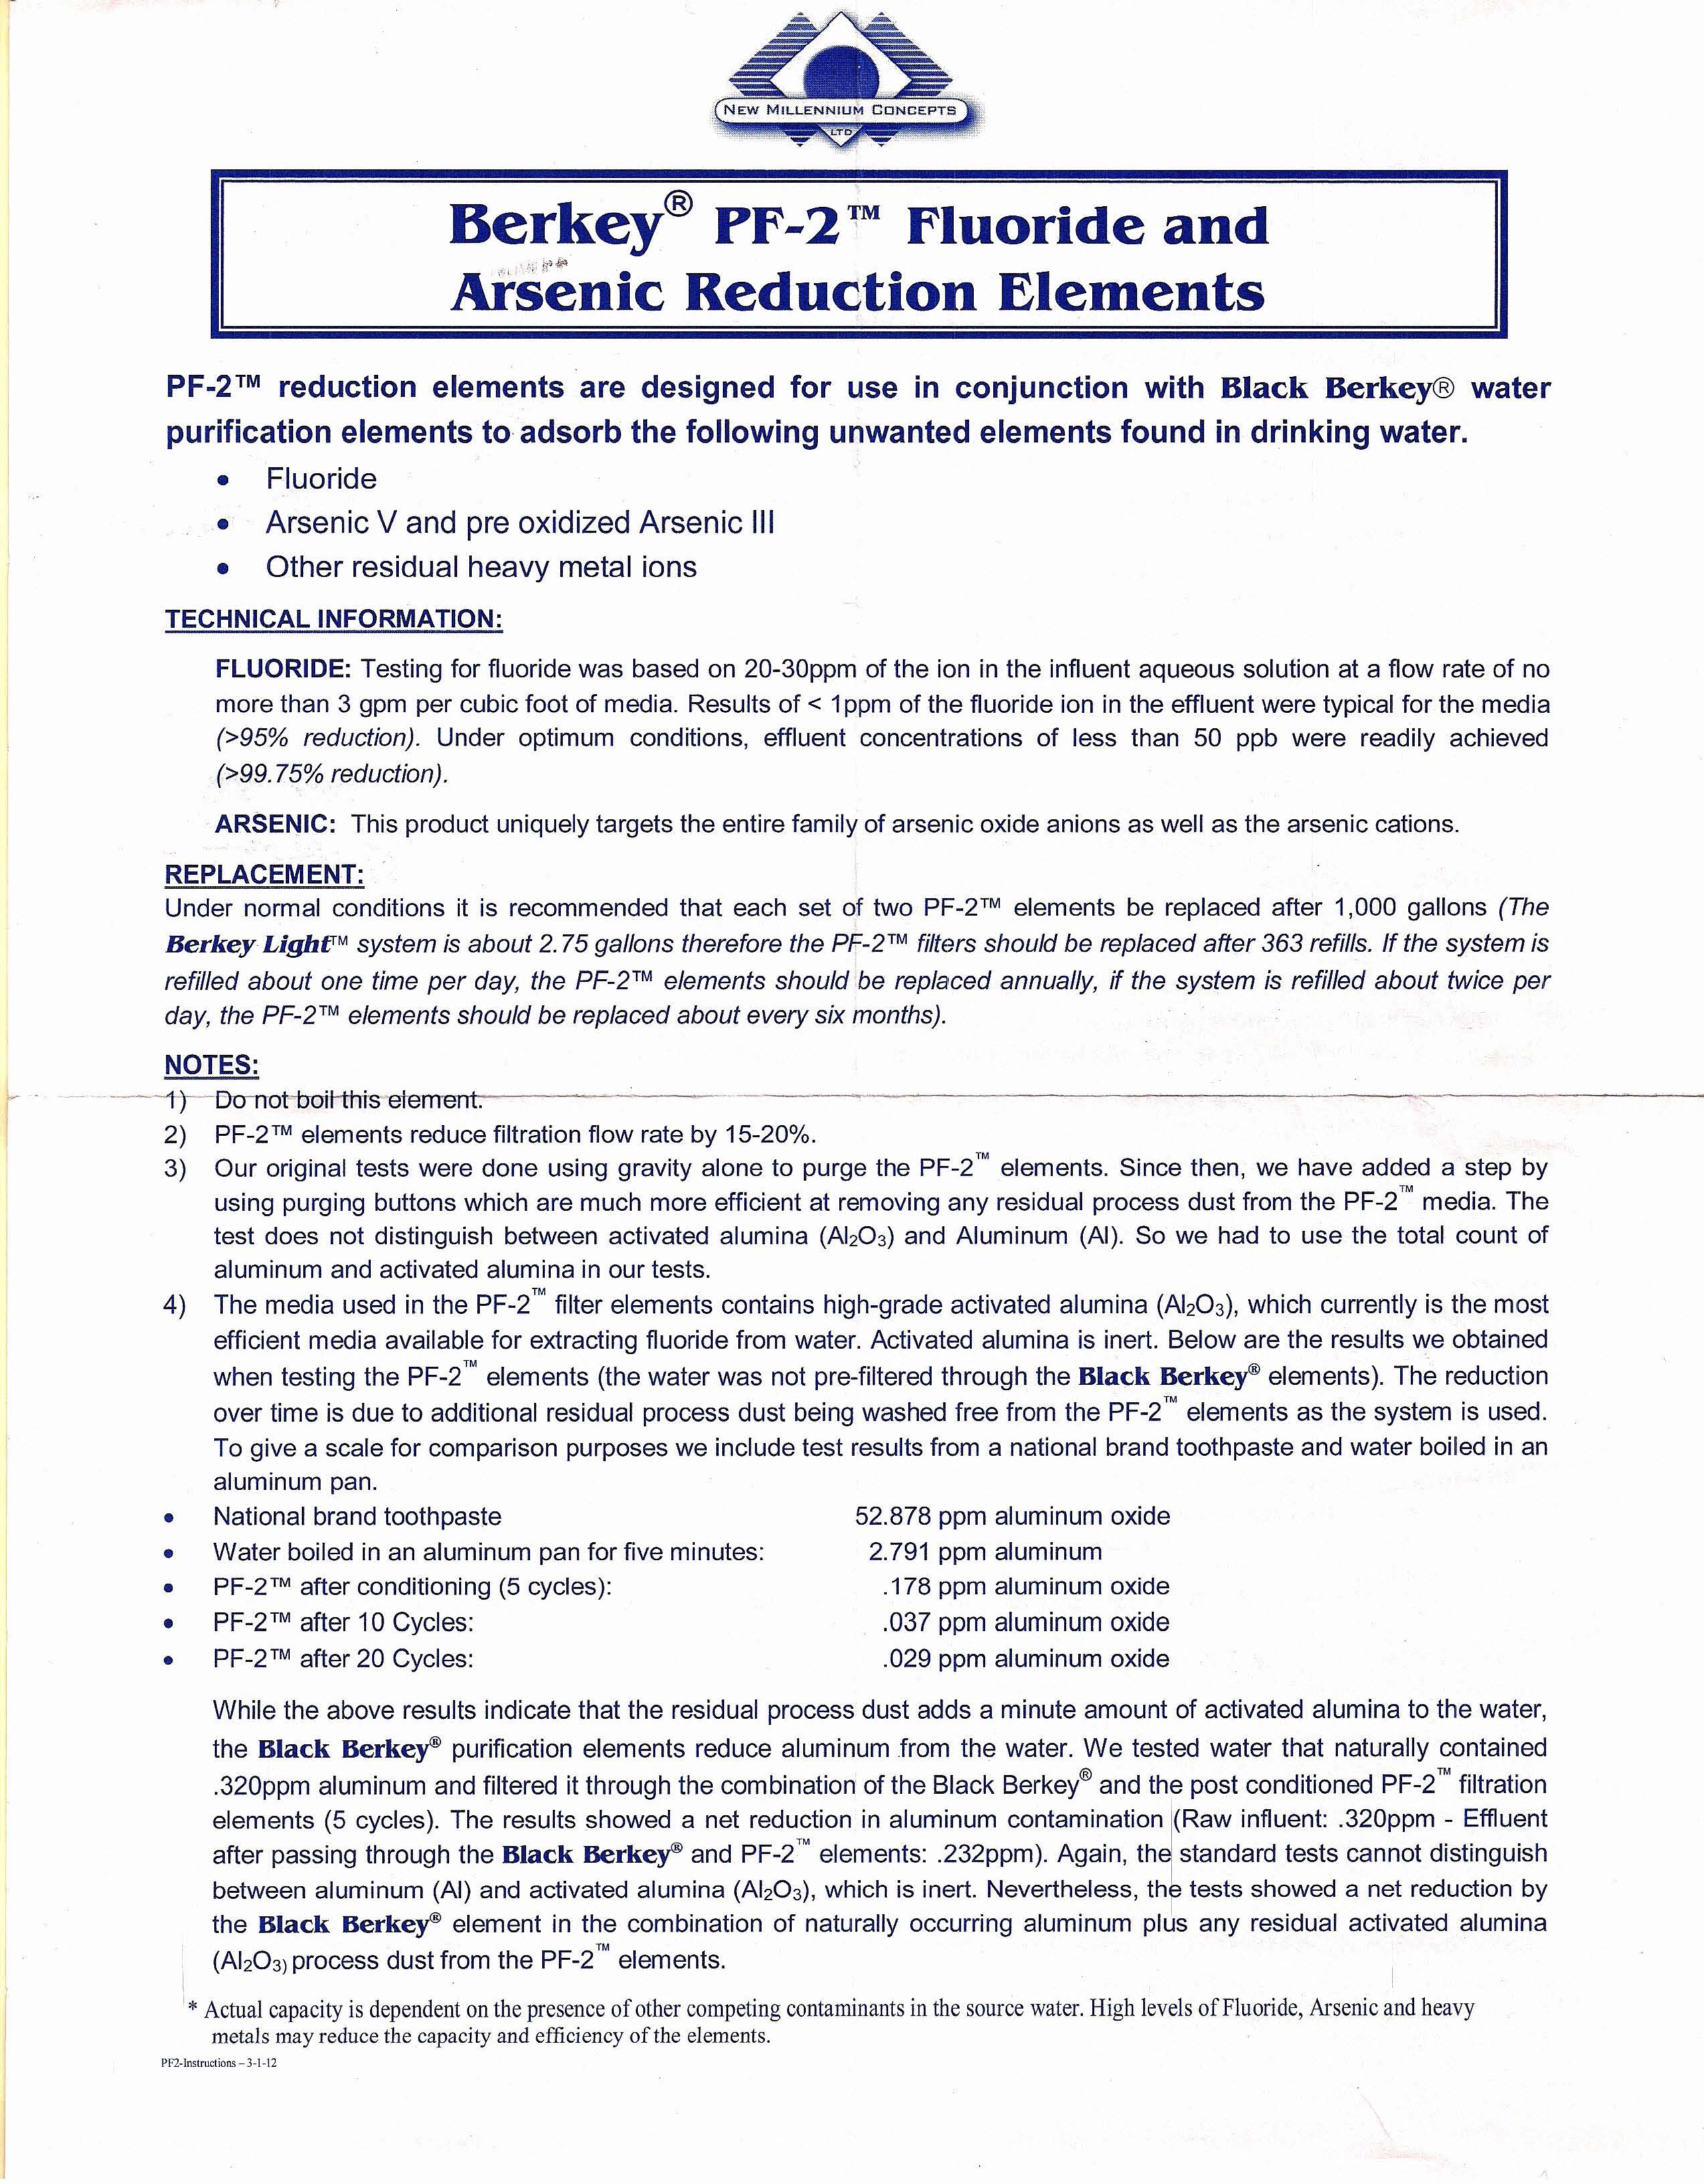 Berkey PF-2 Fluoride and Arsenic Reduction Elements